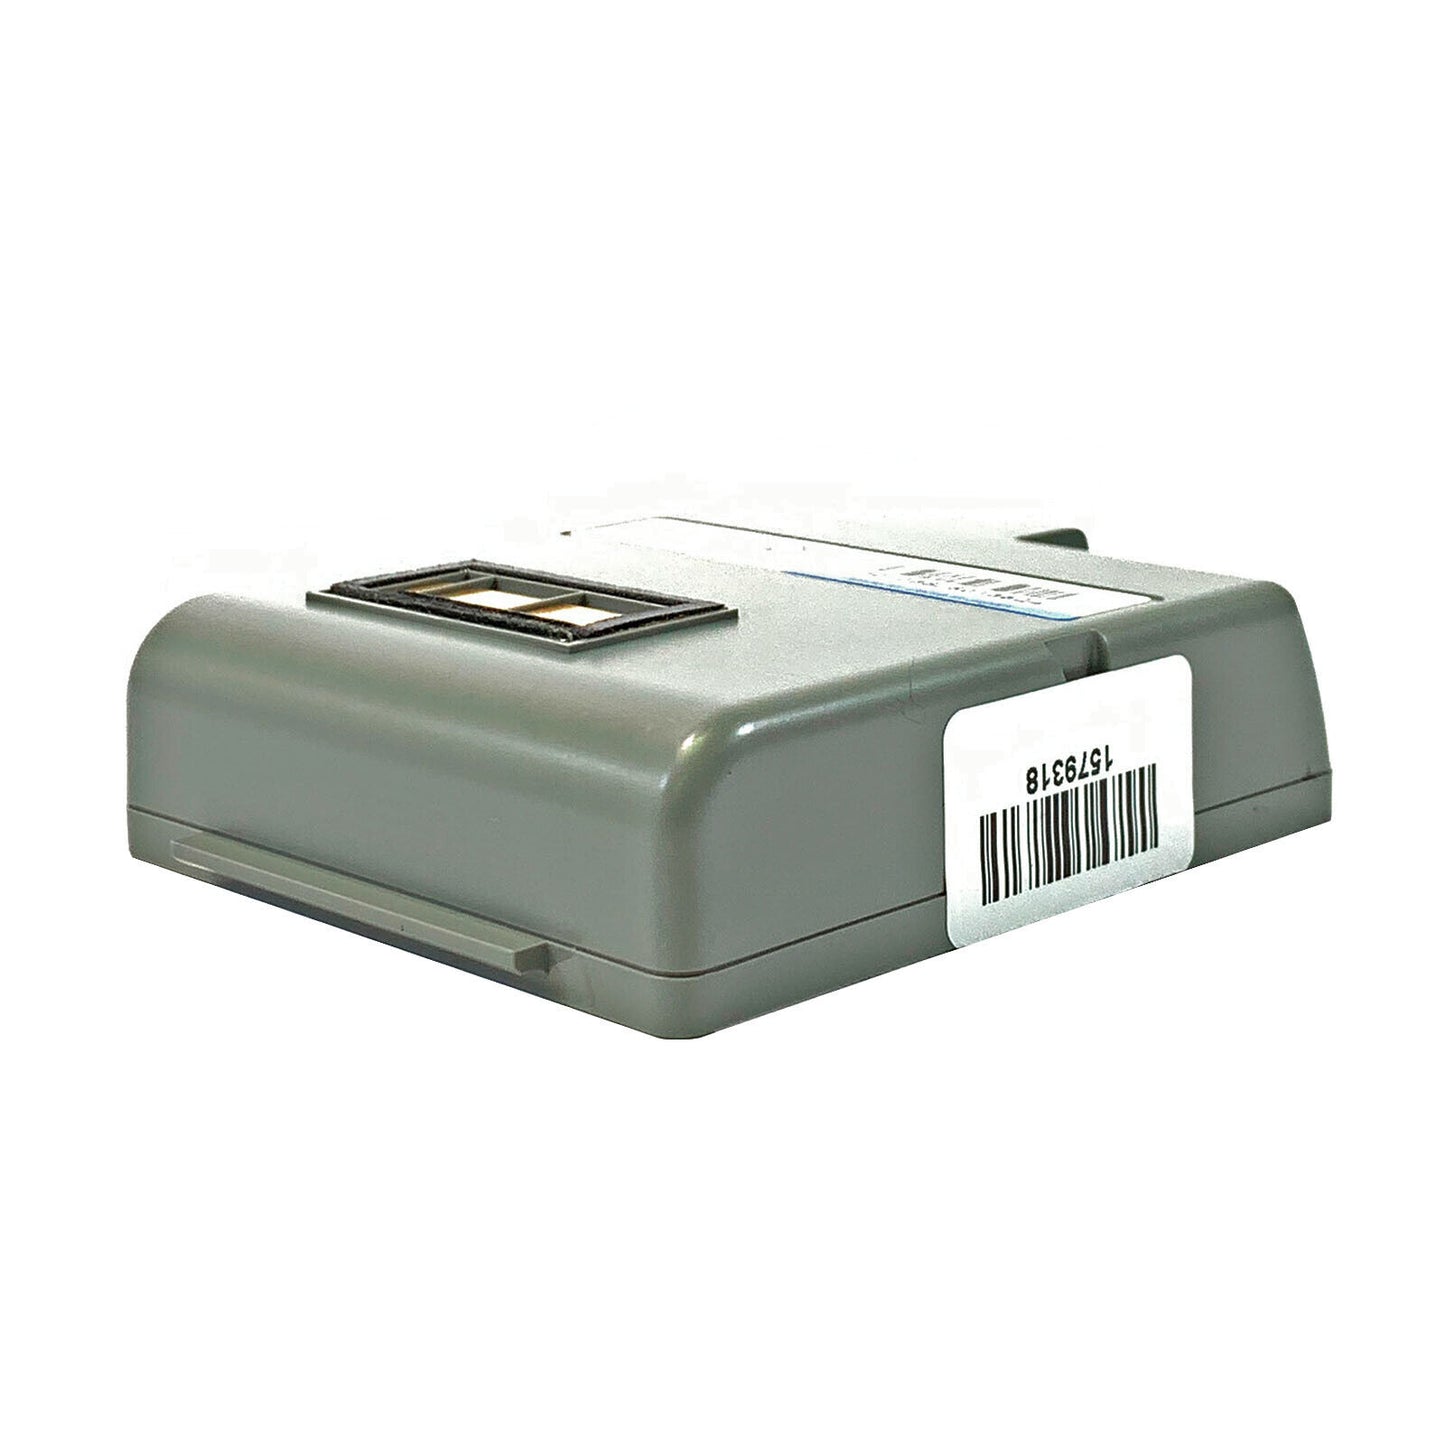 OEM Used Zebra AT16293-1 Li-Ion Battery 7.4V for QL420 QL420+ Printers